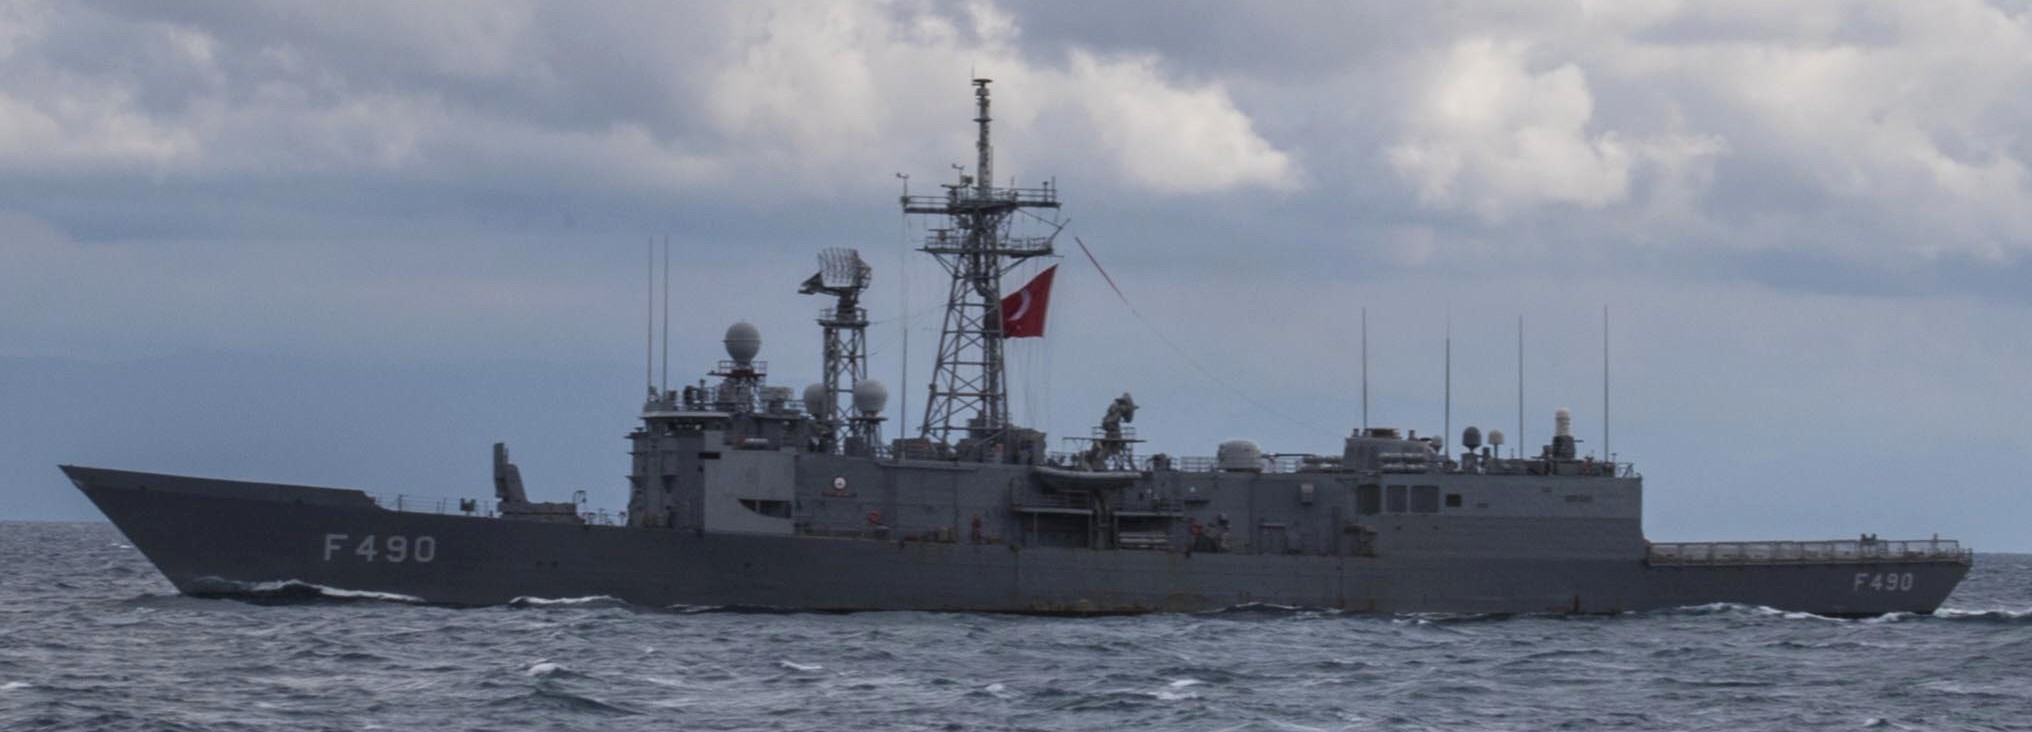 f-490 tcg gaziantep gabya g-class perry frigate ffg turkish navy türk deniz kuvvetleri 18